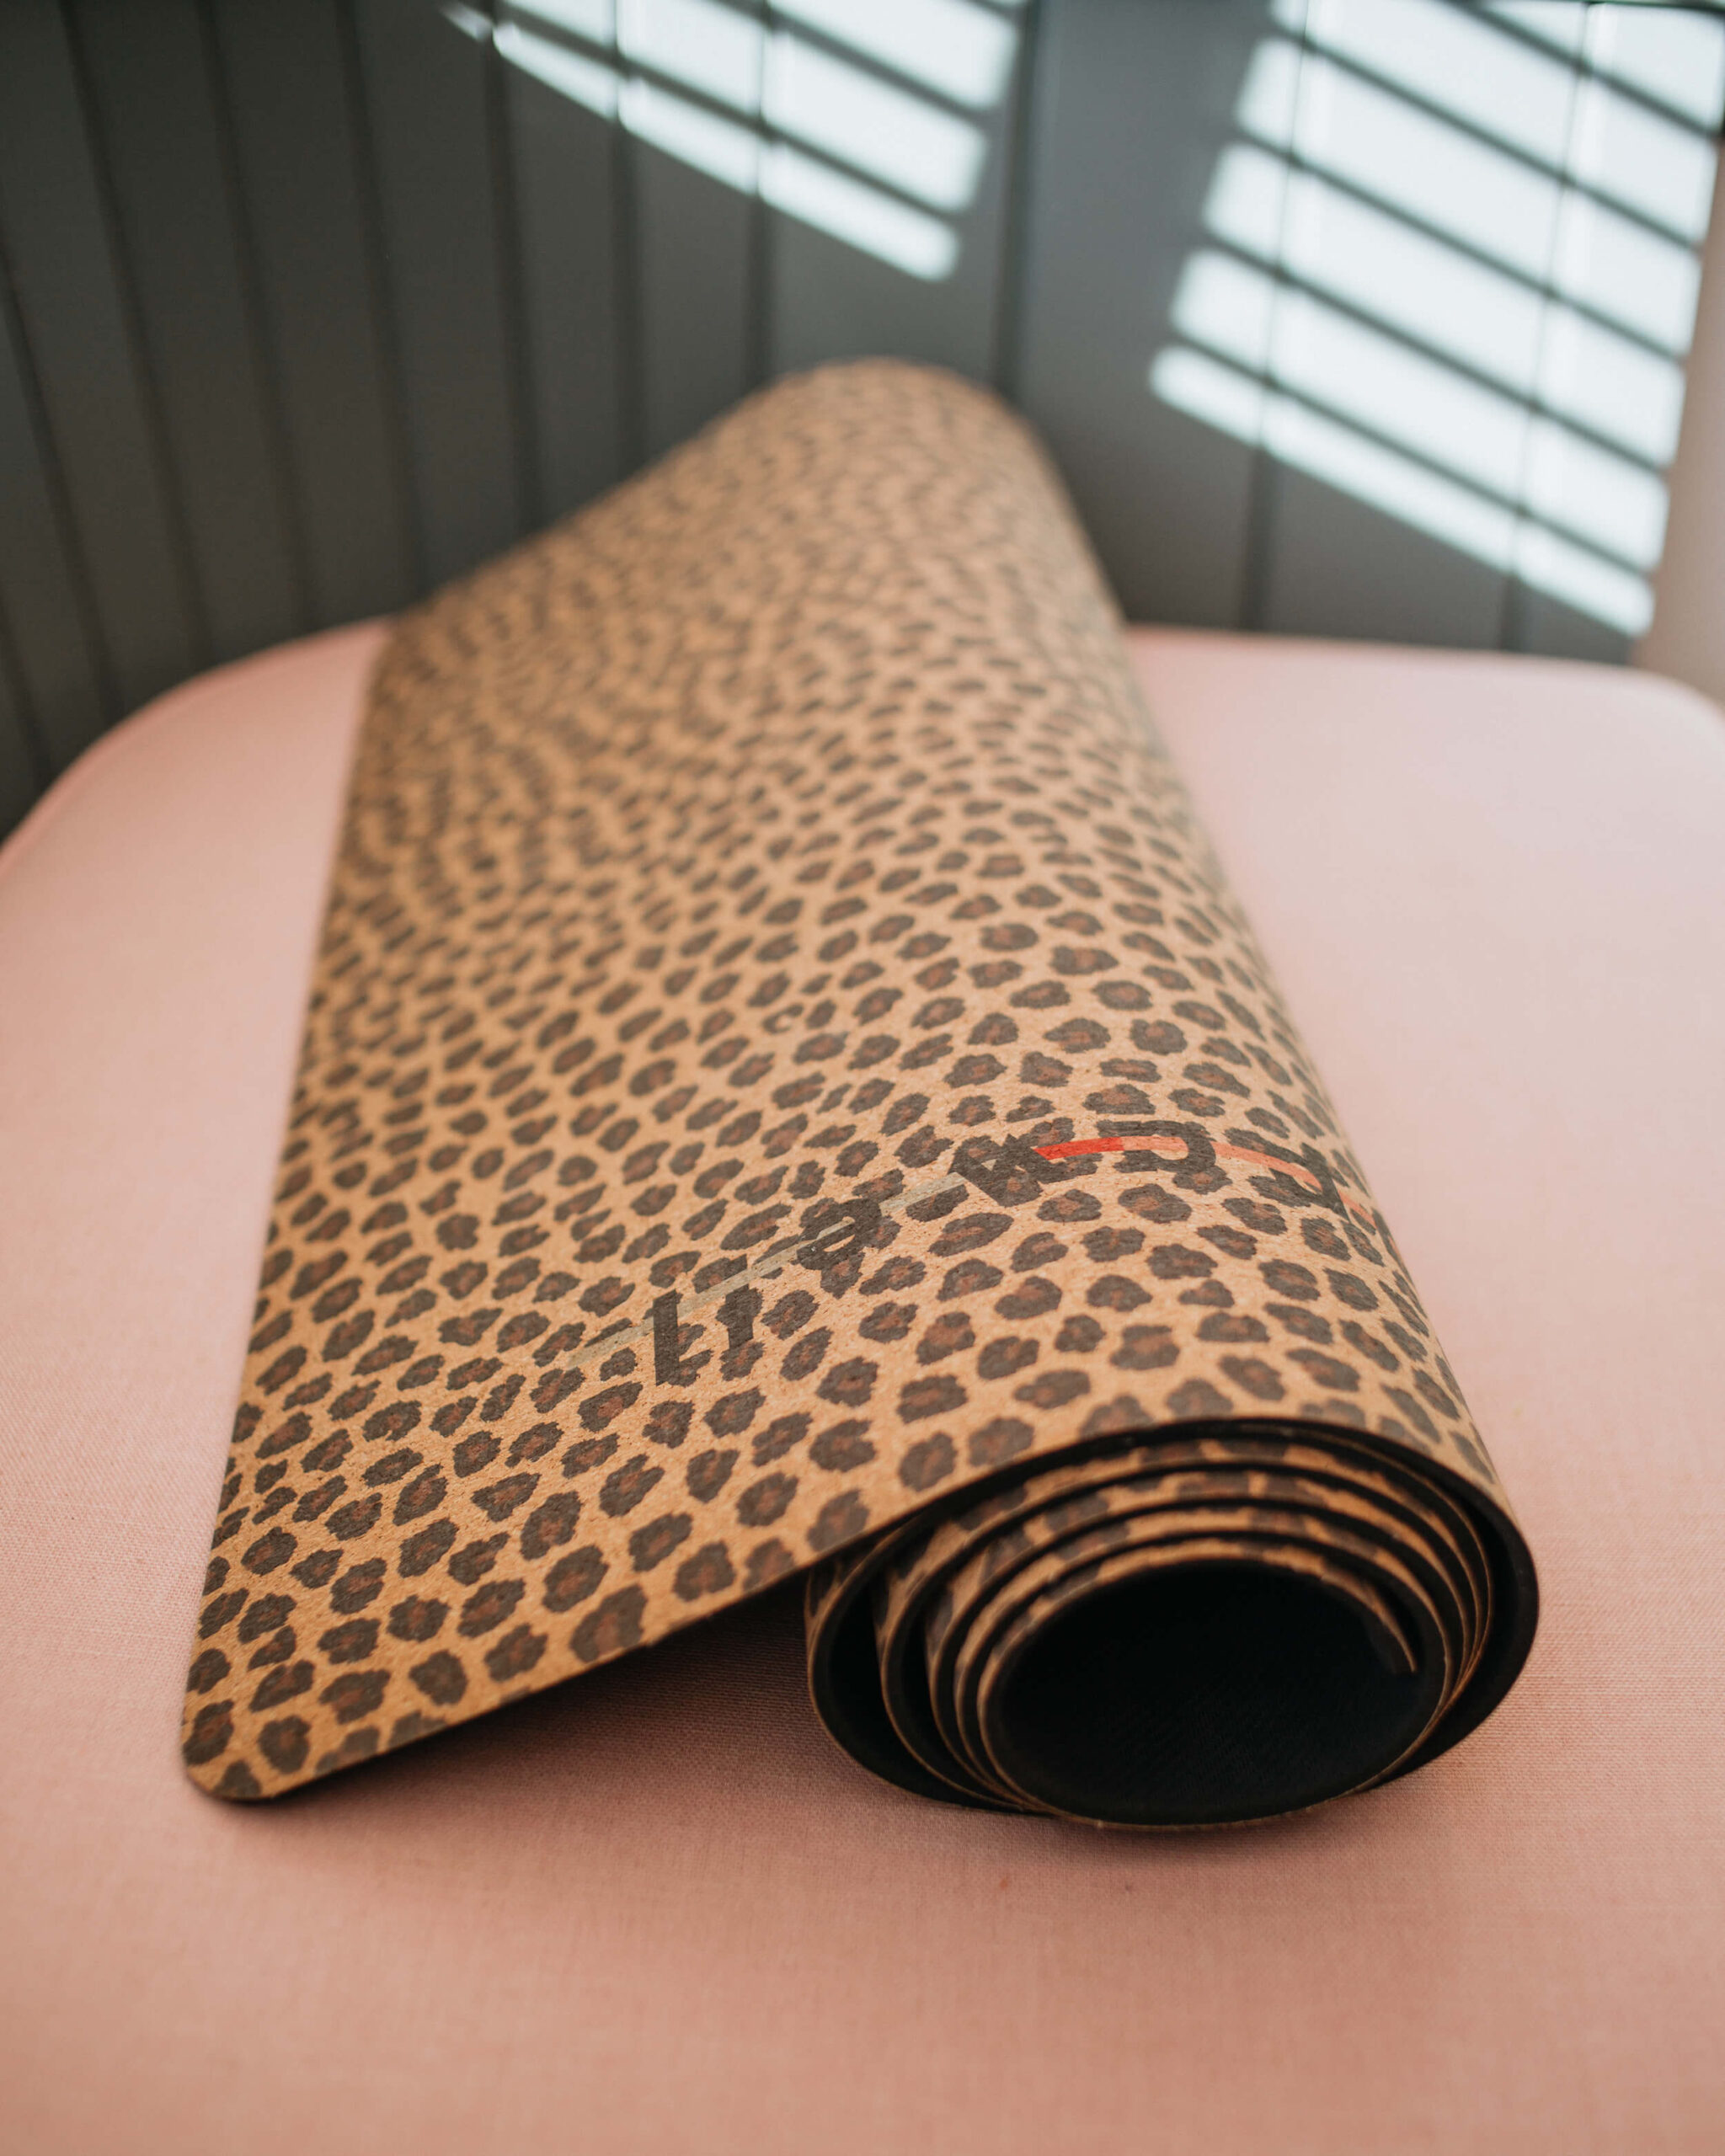 My Leopard Yoga Mat -  Ireland